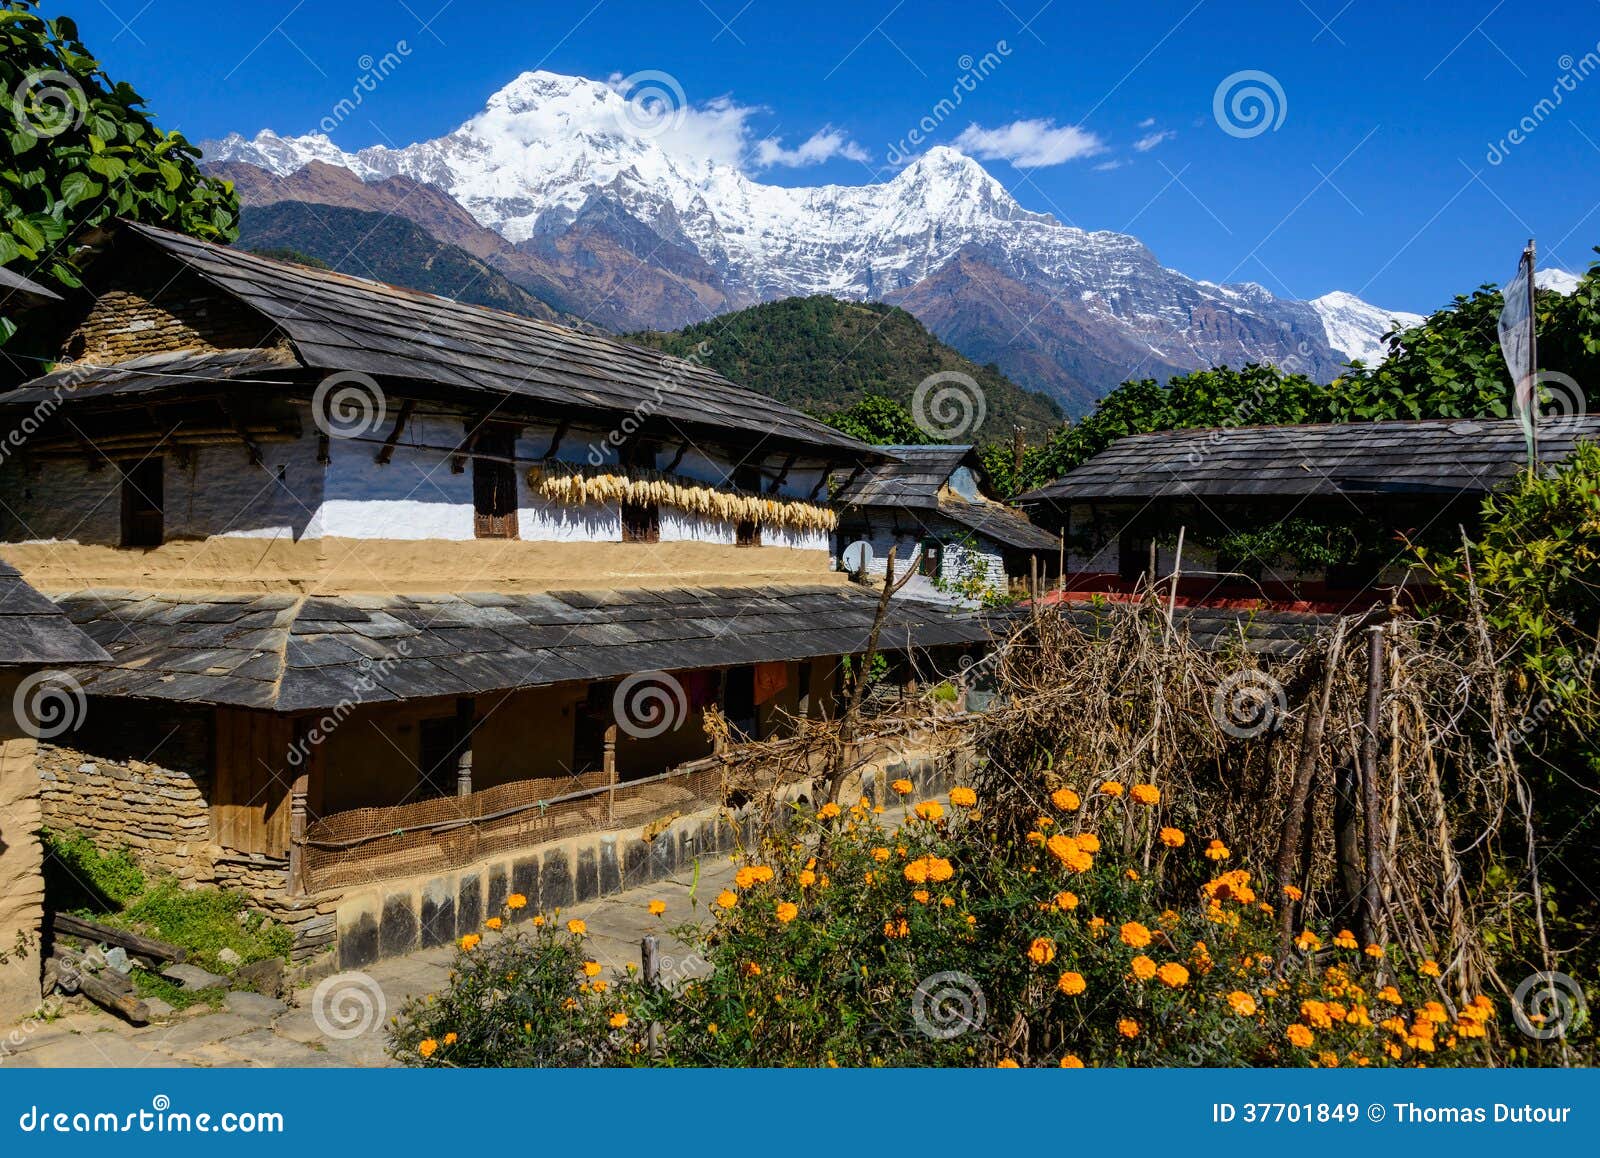 ghandruk village in the annapurna region